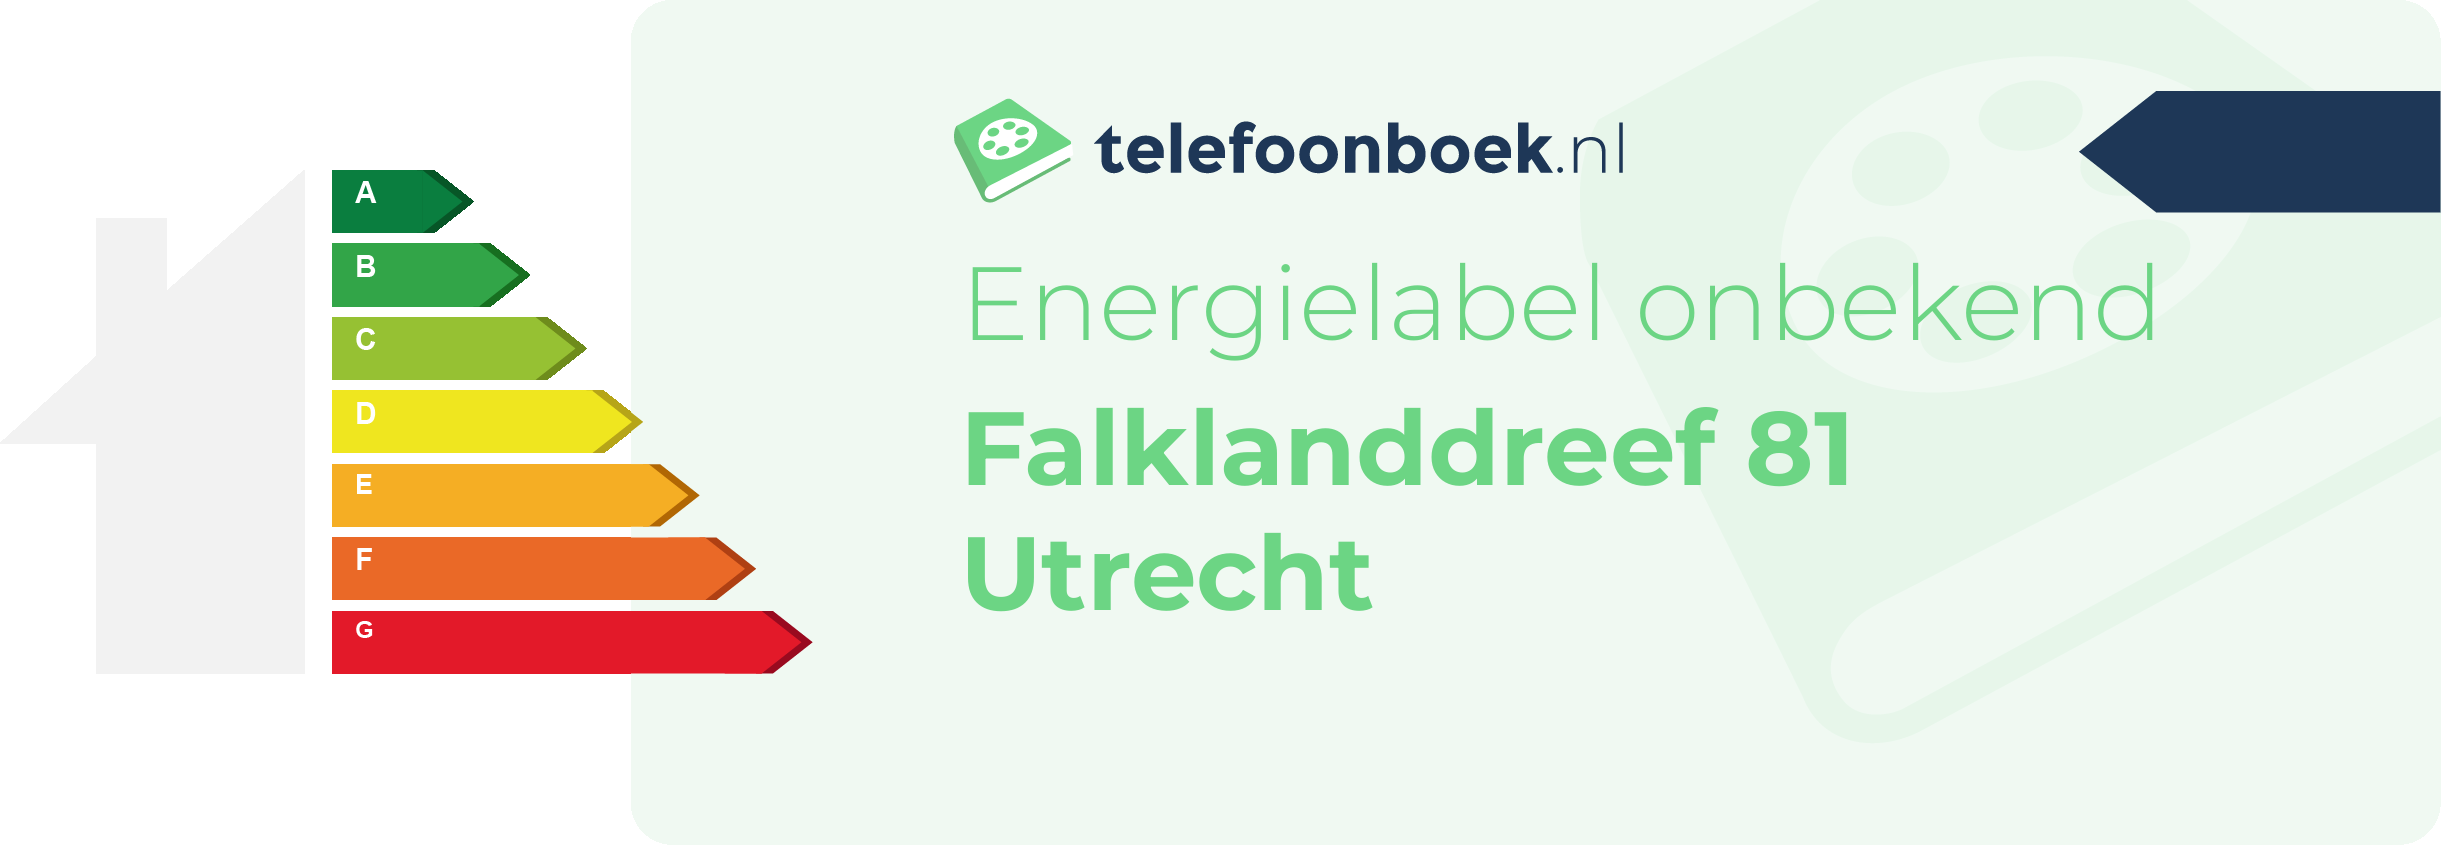 Energielabel Falklanddreef 81 Utrecht